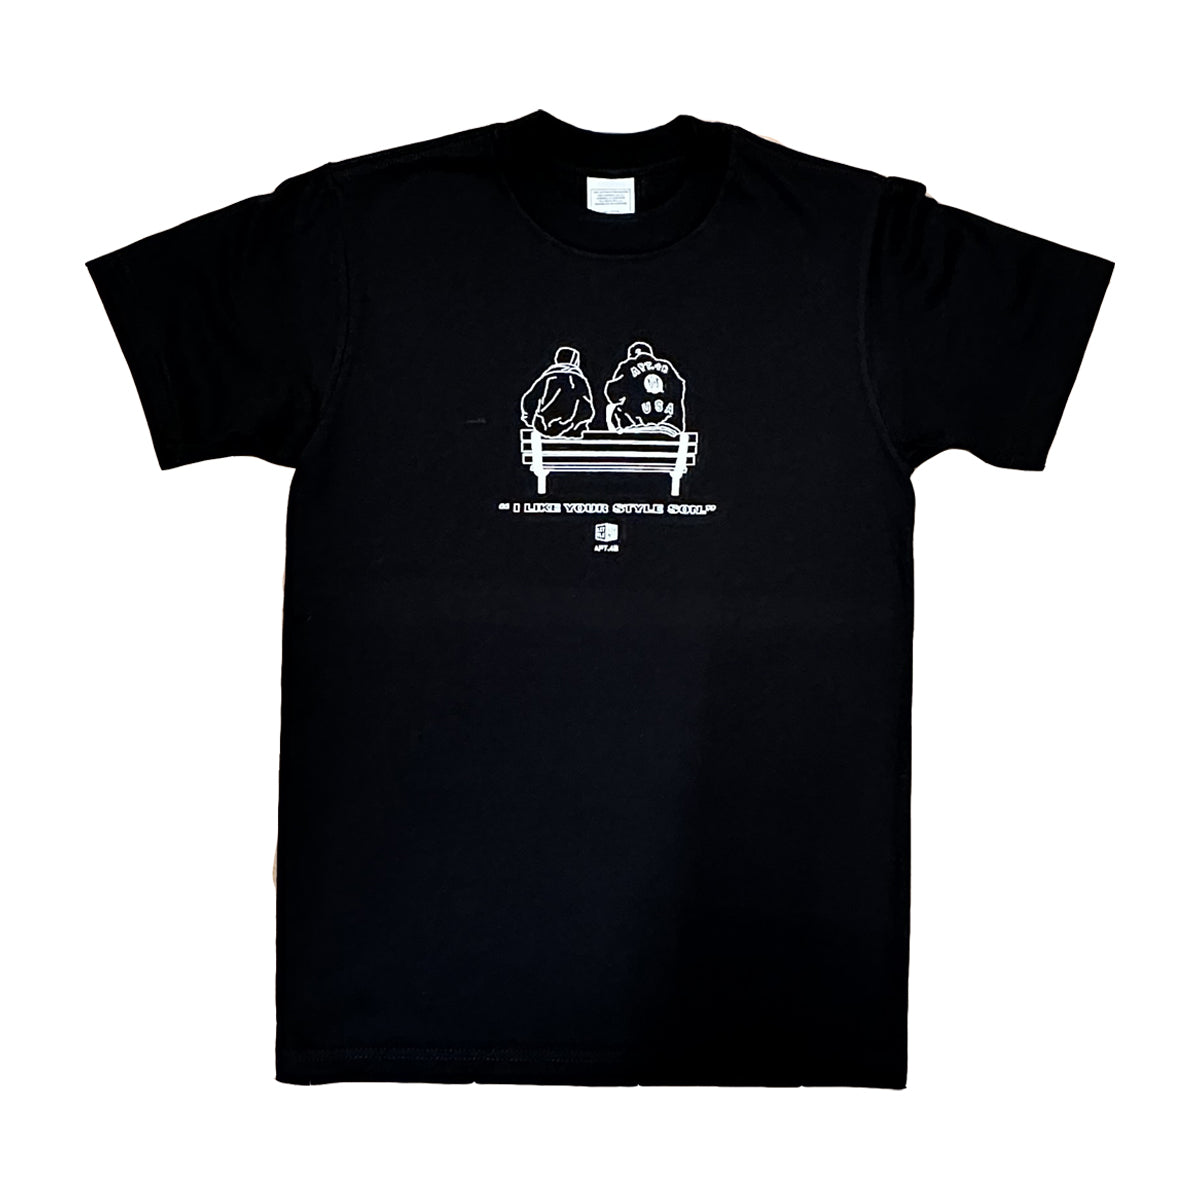 'I Like Your Style' x Apt.4b Collab ADULT T-shirt (Black)